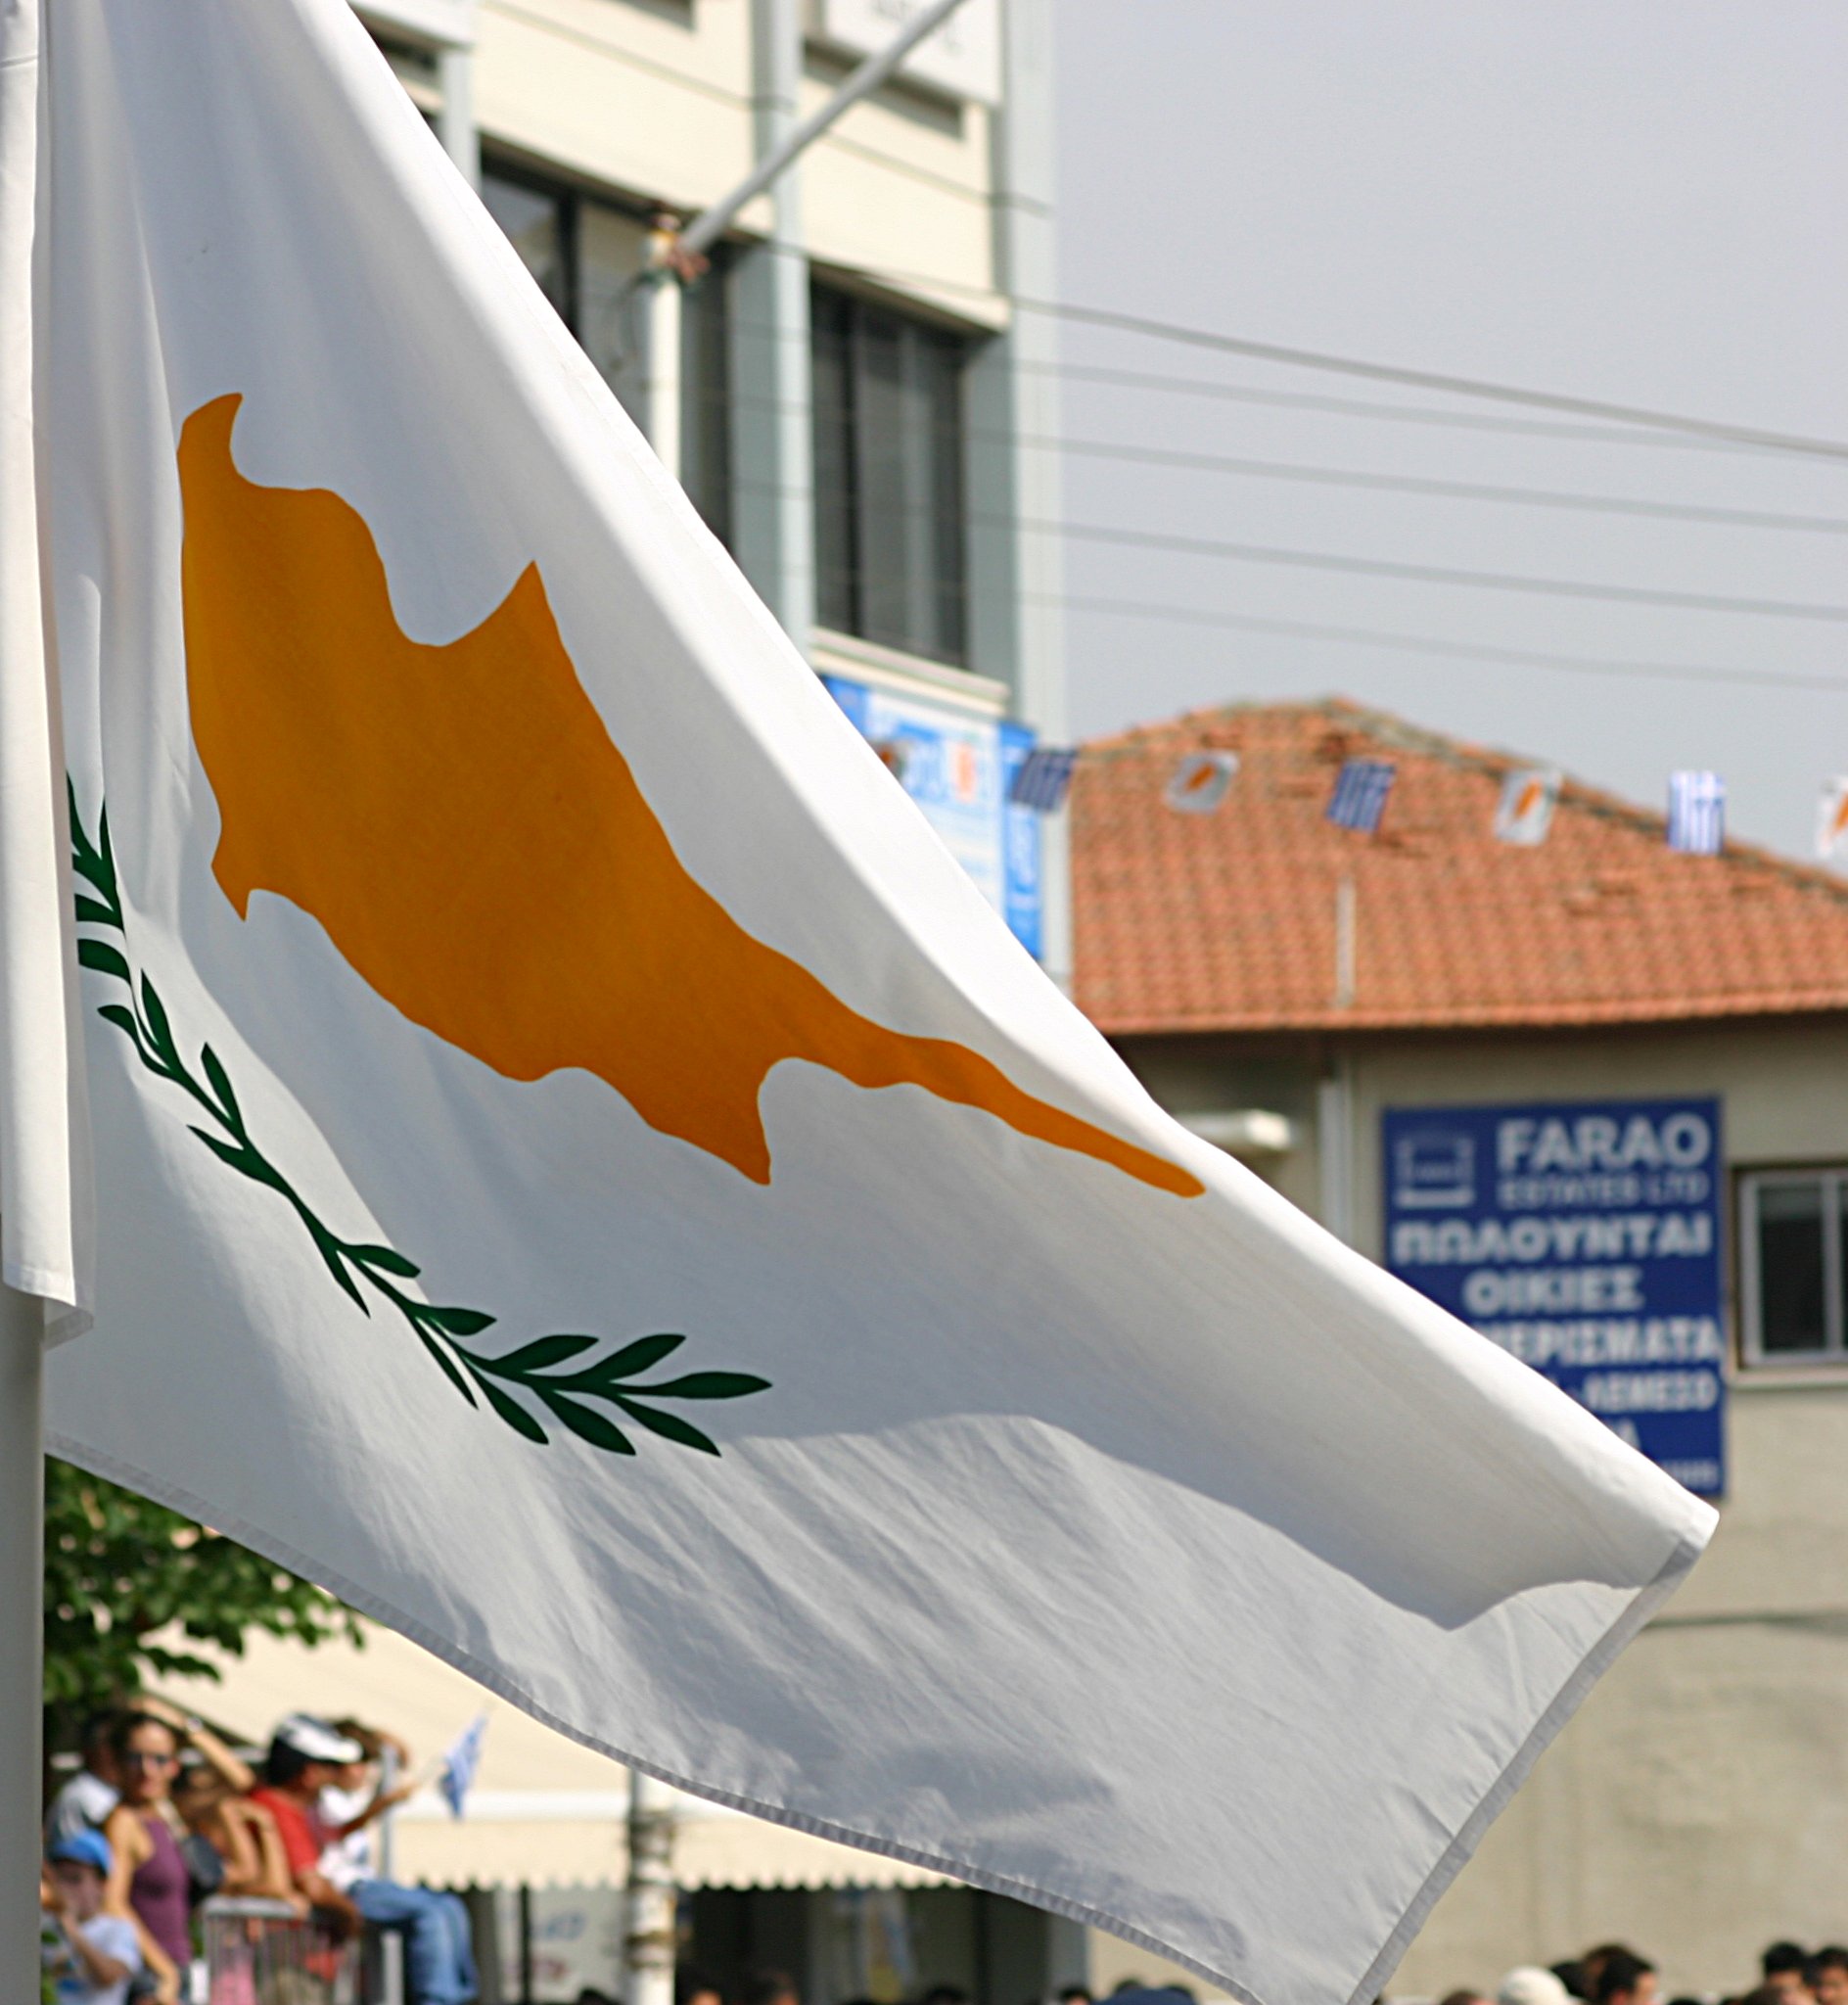 Melco Intl opposes Cyprus deadline extension: report